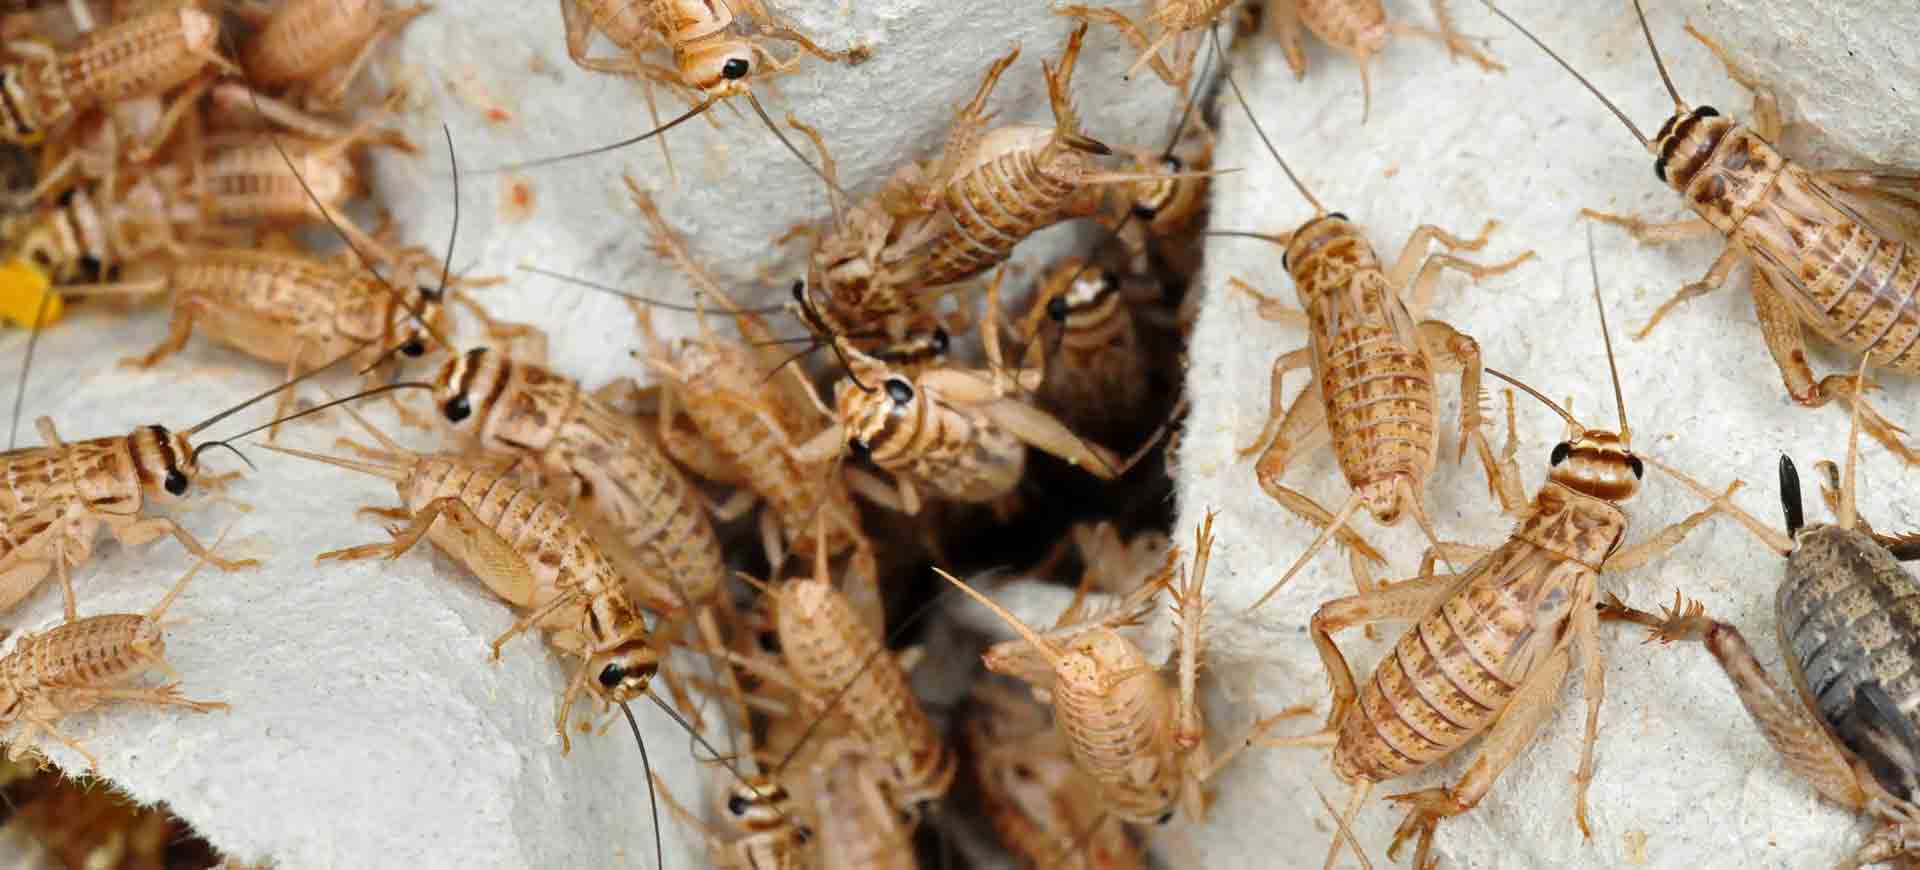 cricket pest control crest